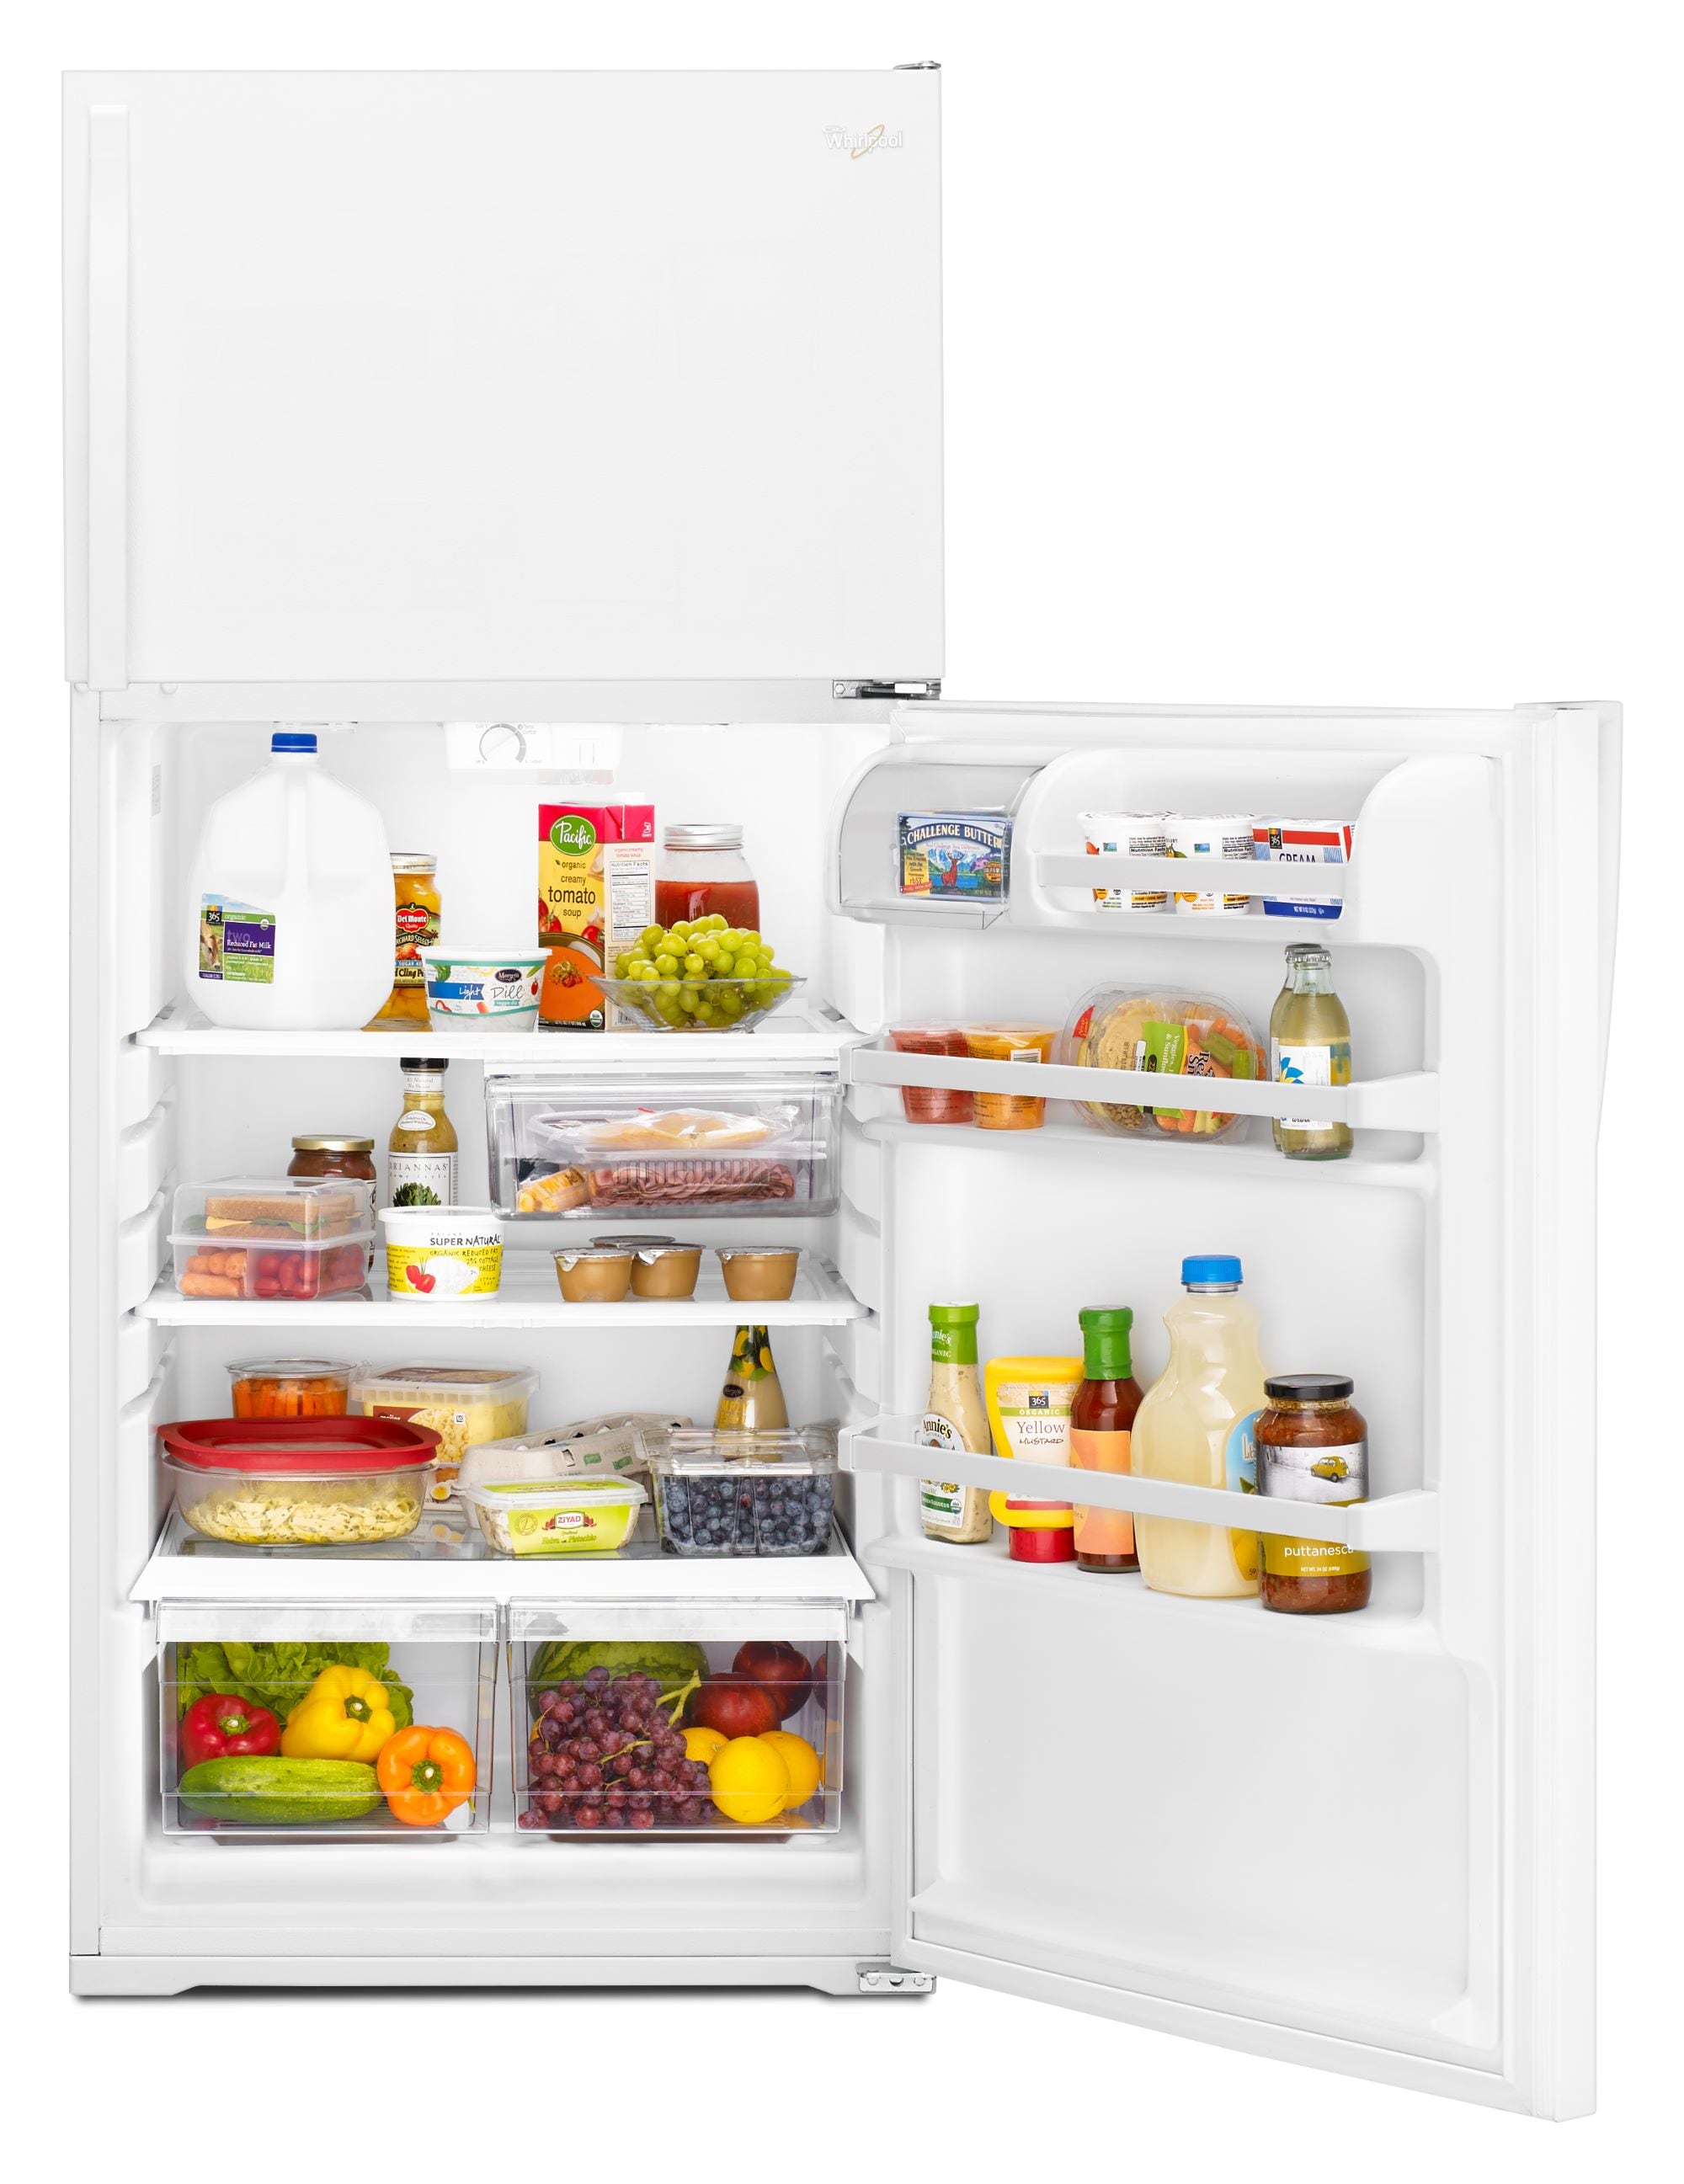 Whirlpool 14.3-cu ft Top-Freezer Refrigerator (White) at Lowes.com